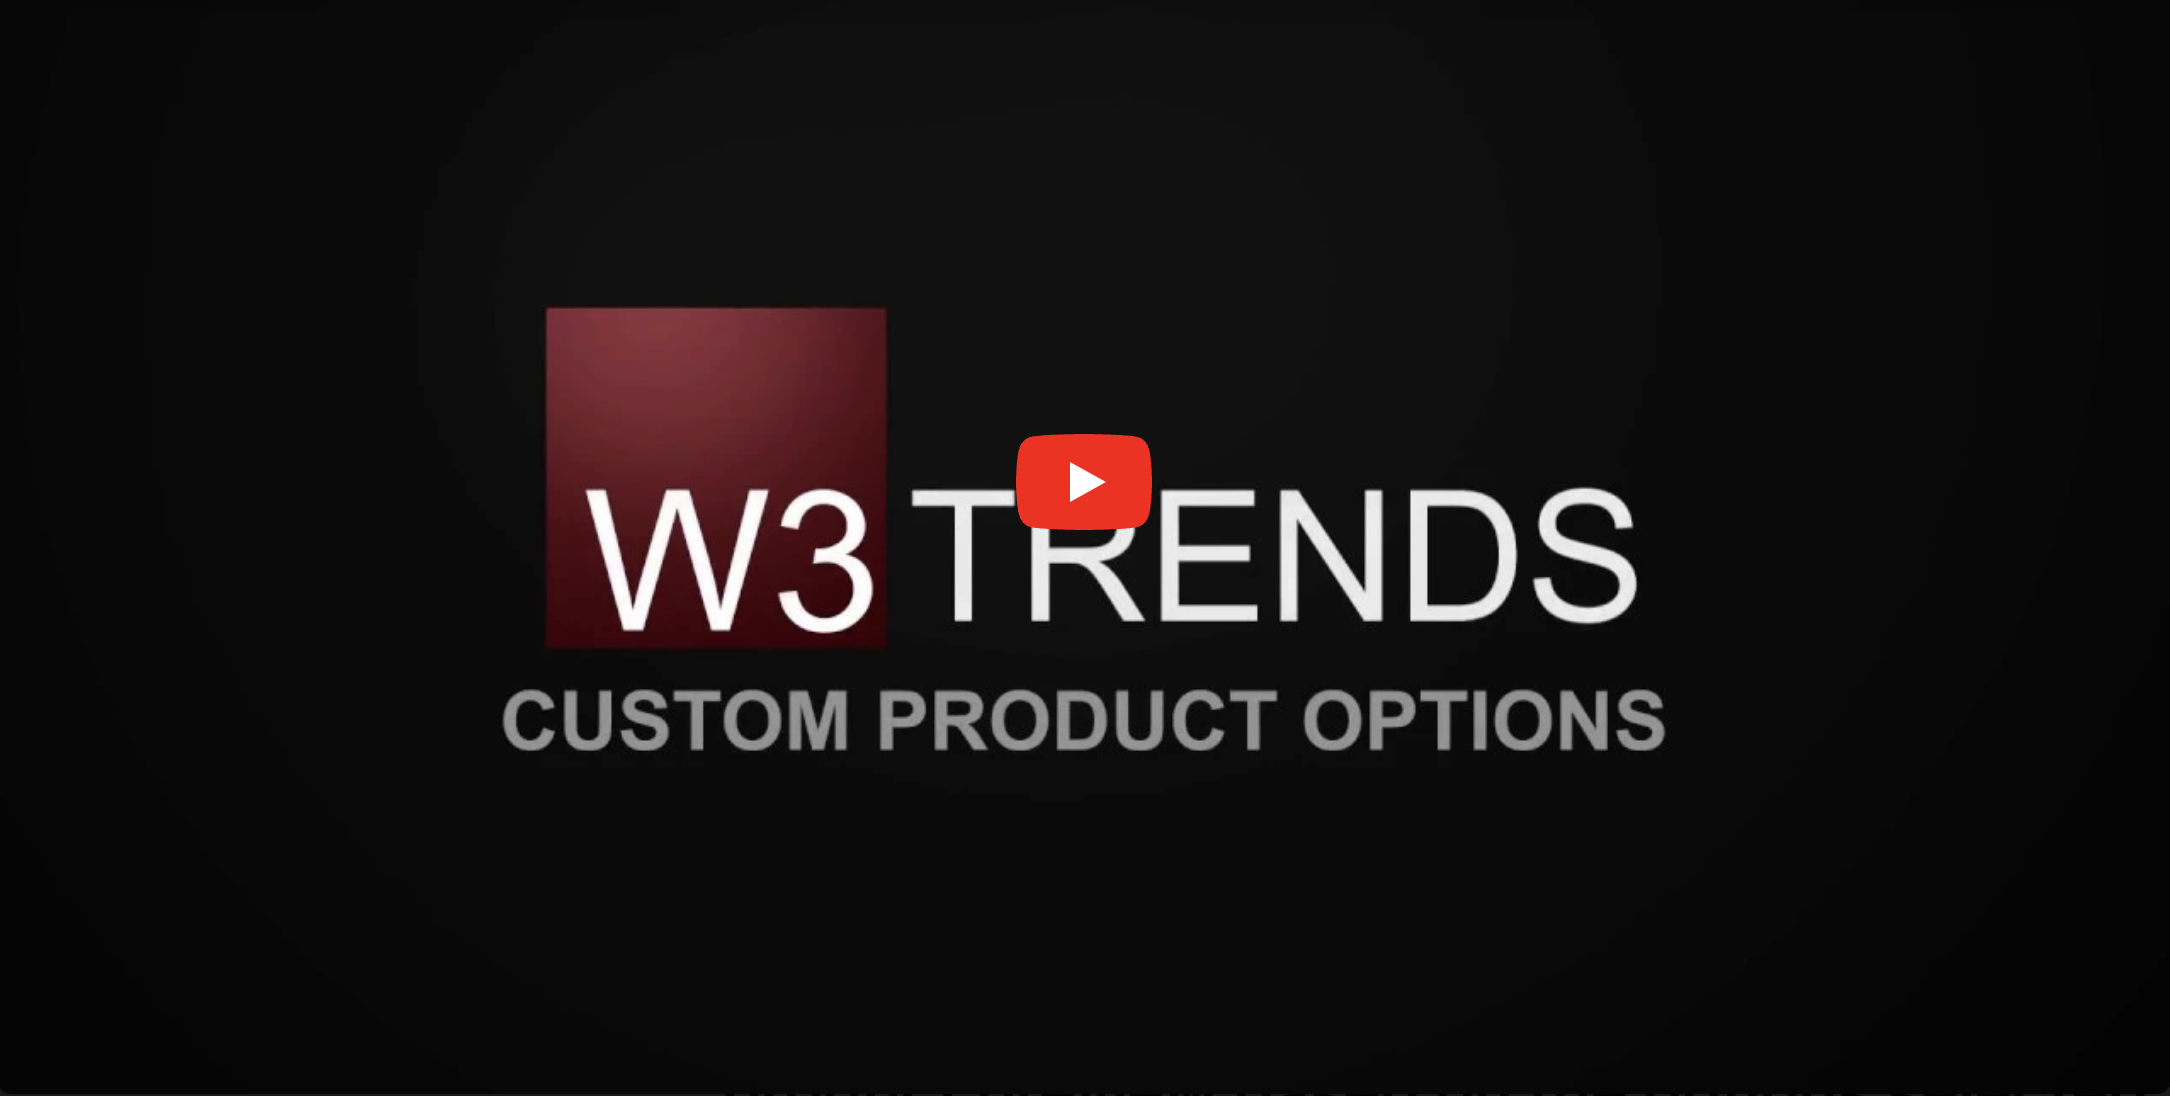 W3 trends